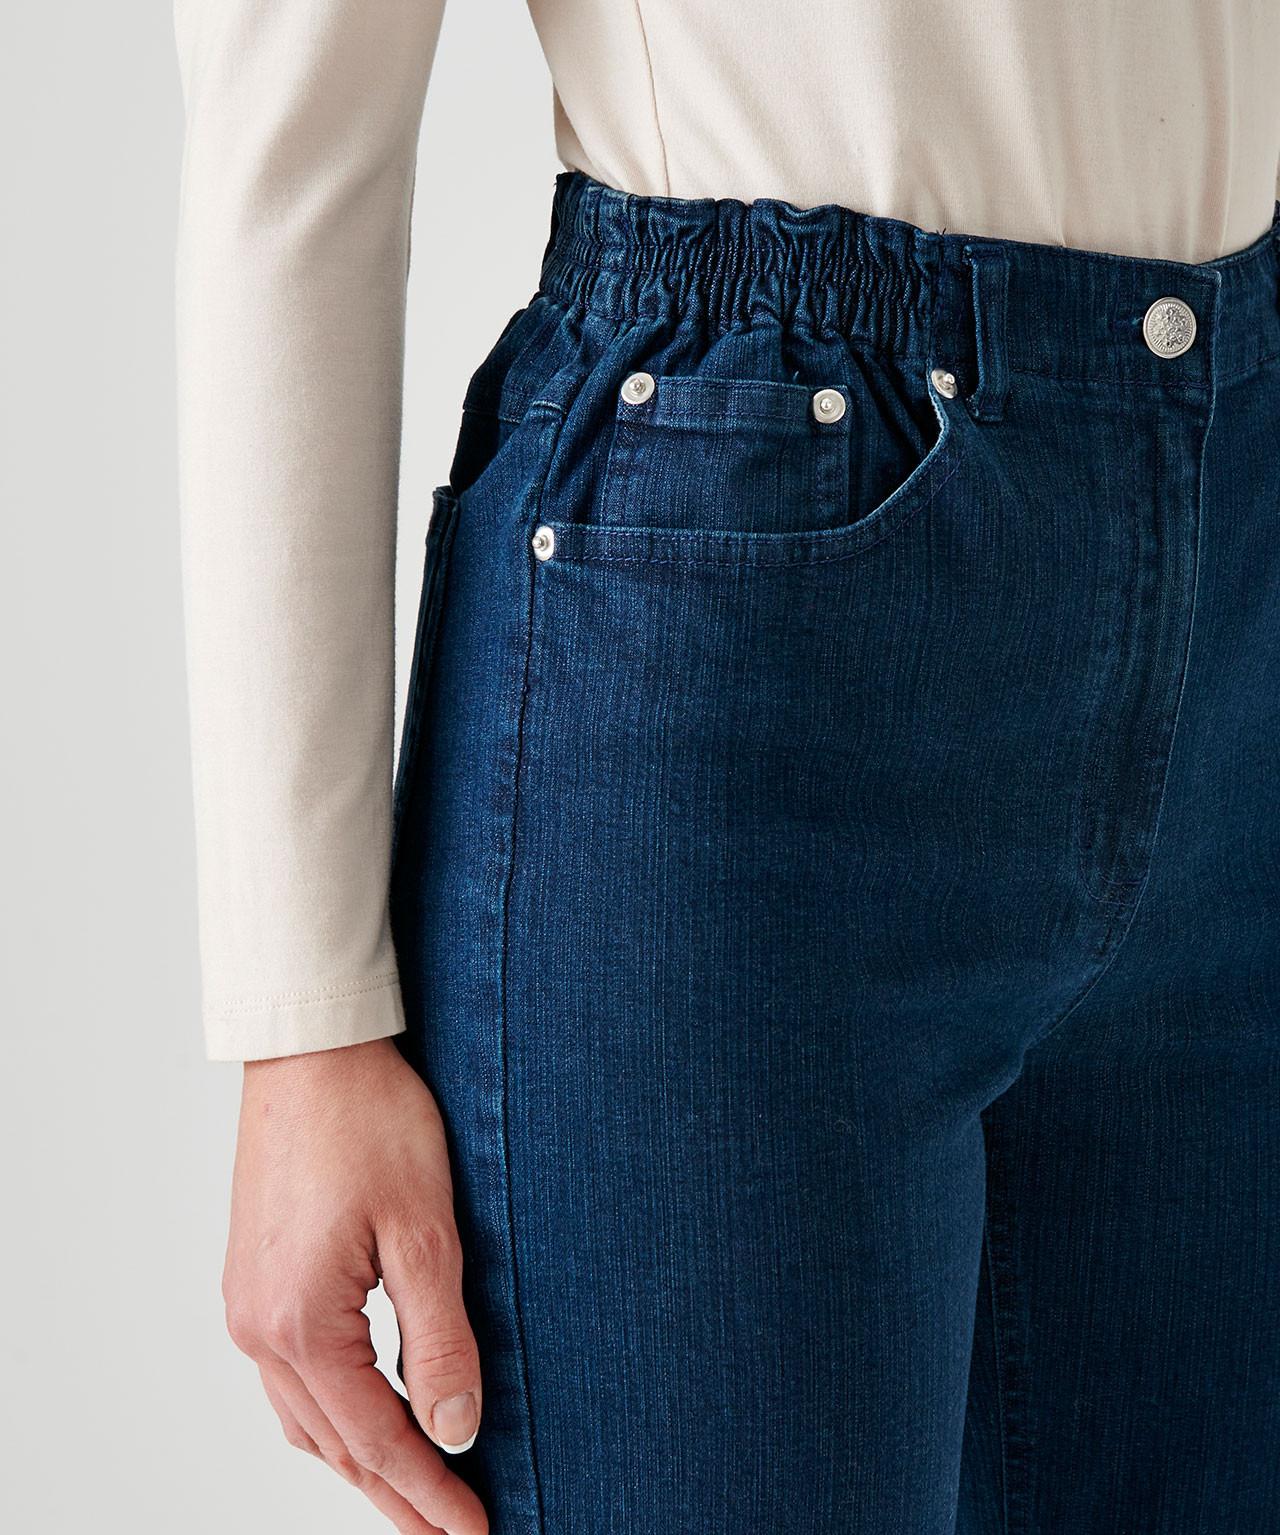 Damart  Jean 5 poches extensible, coupe droite. 